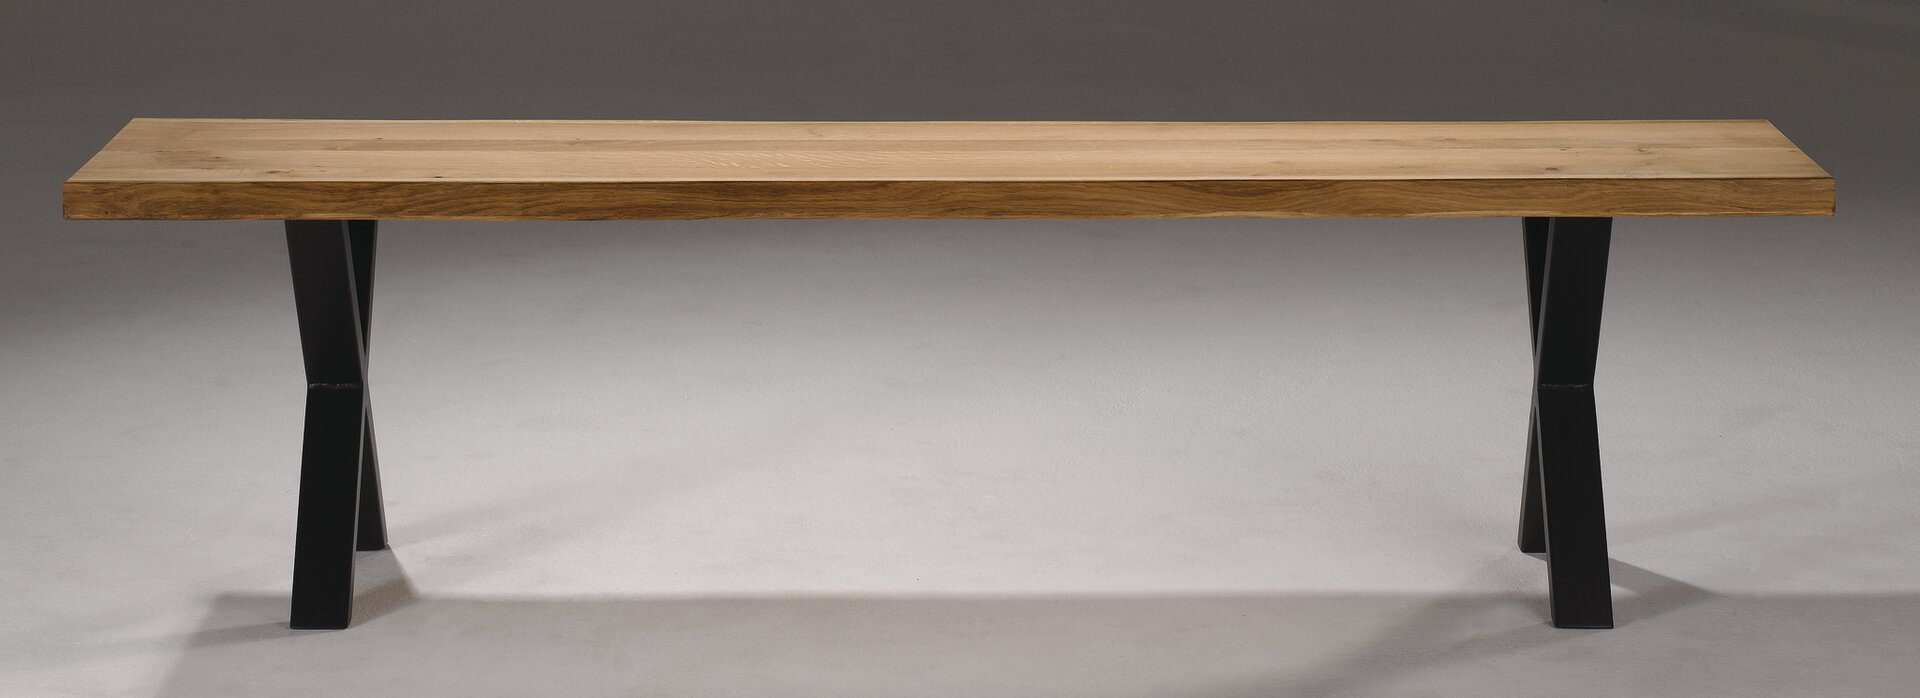 Sitzbank SIGA Vito Holz 40 x 180 cm